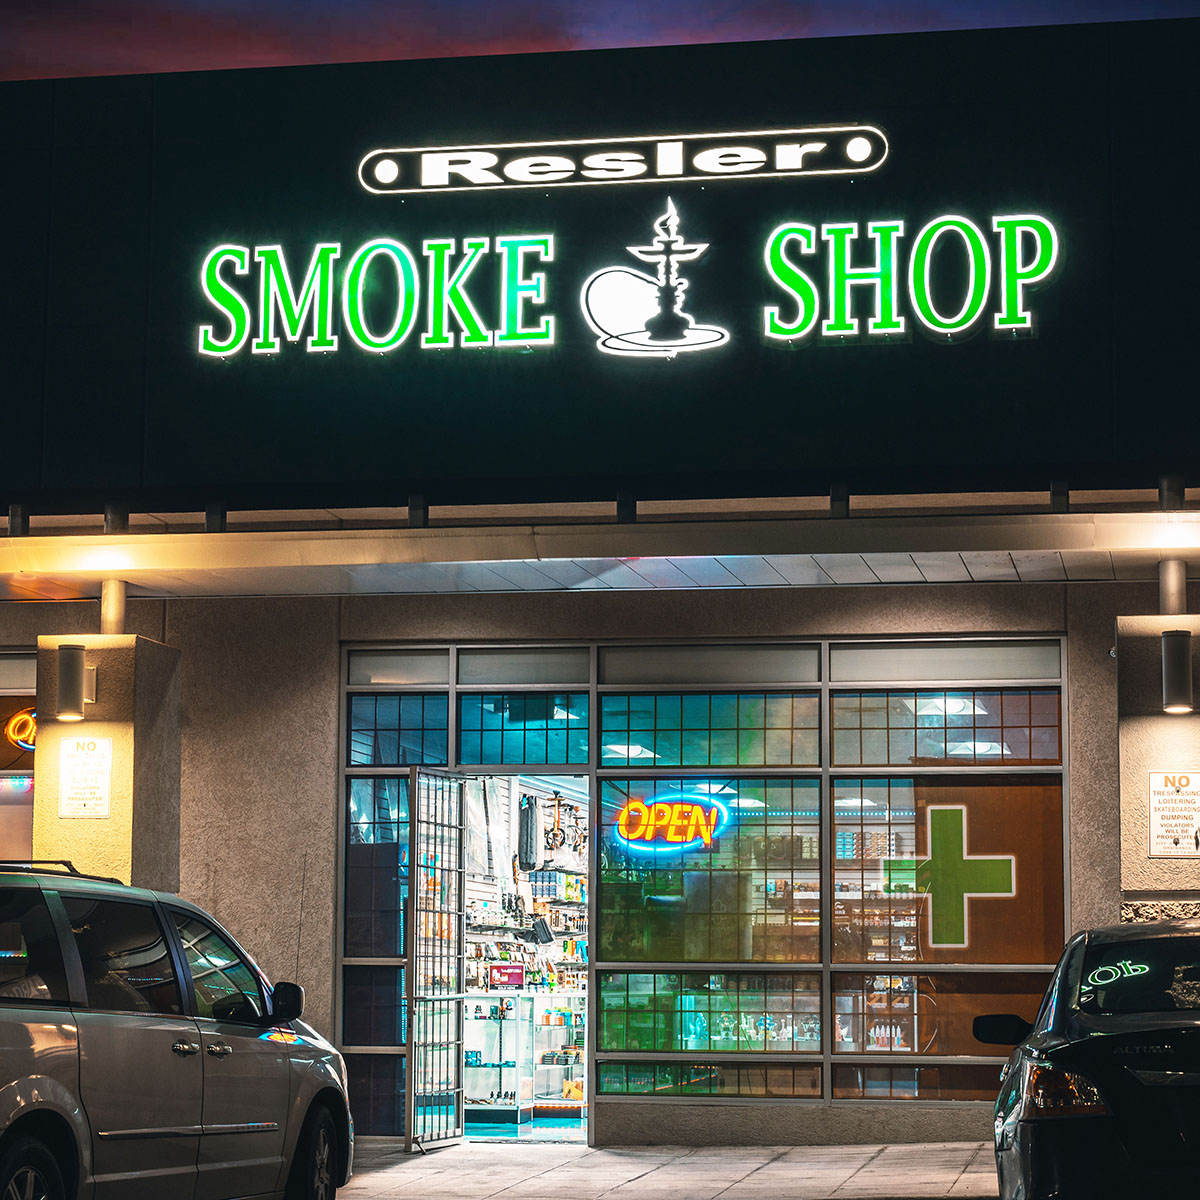 Resler Smoke Shop - 1520 Resler Dr Ste D, El Paso, TX 79912 near me